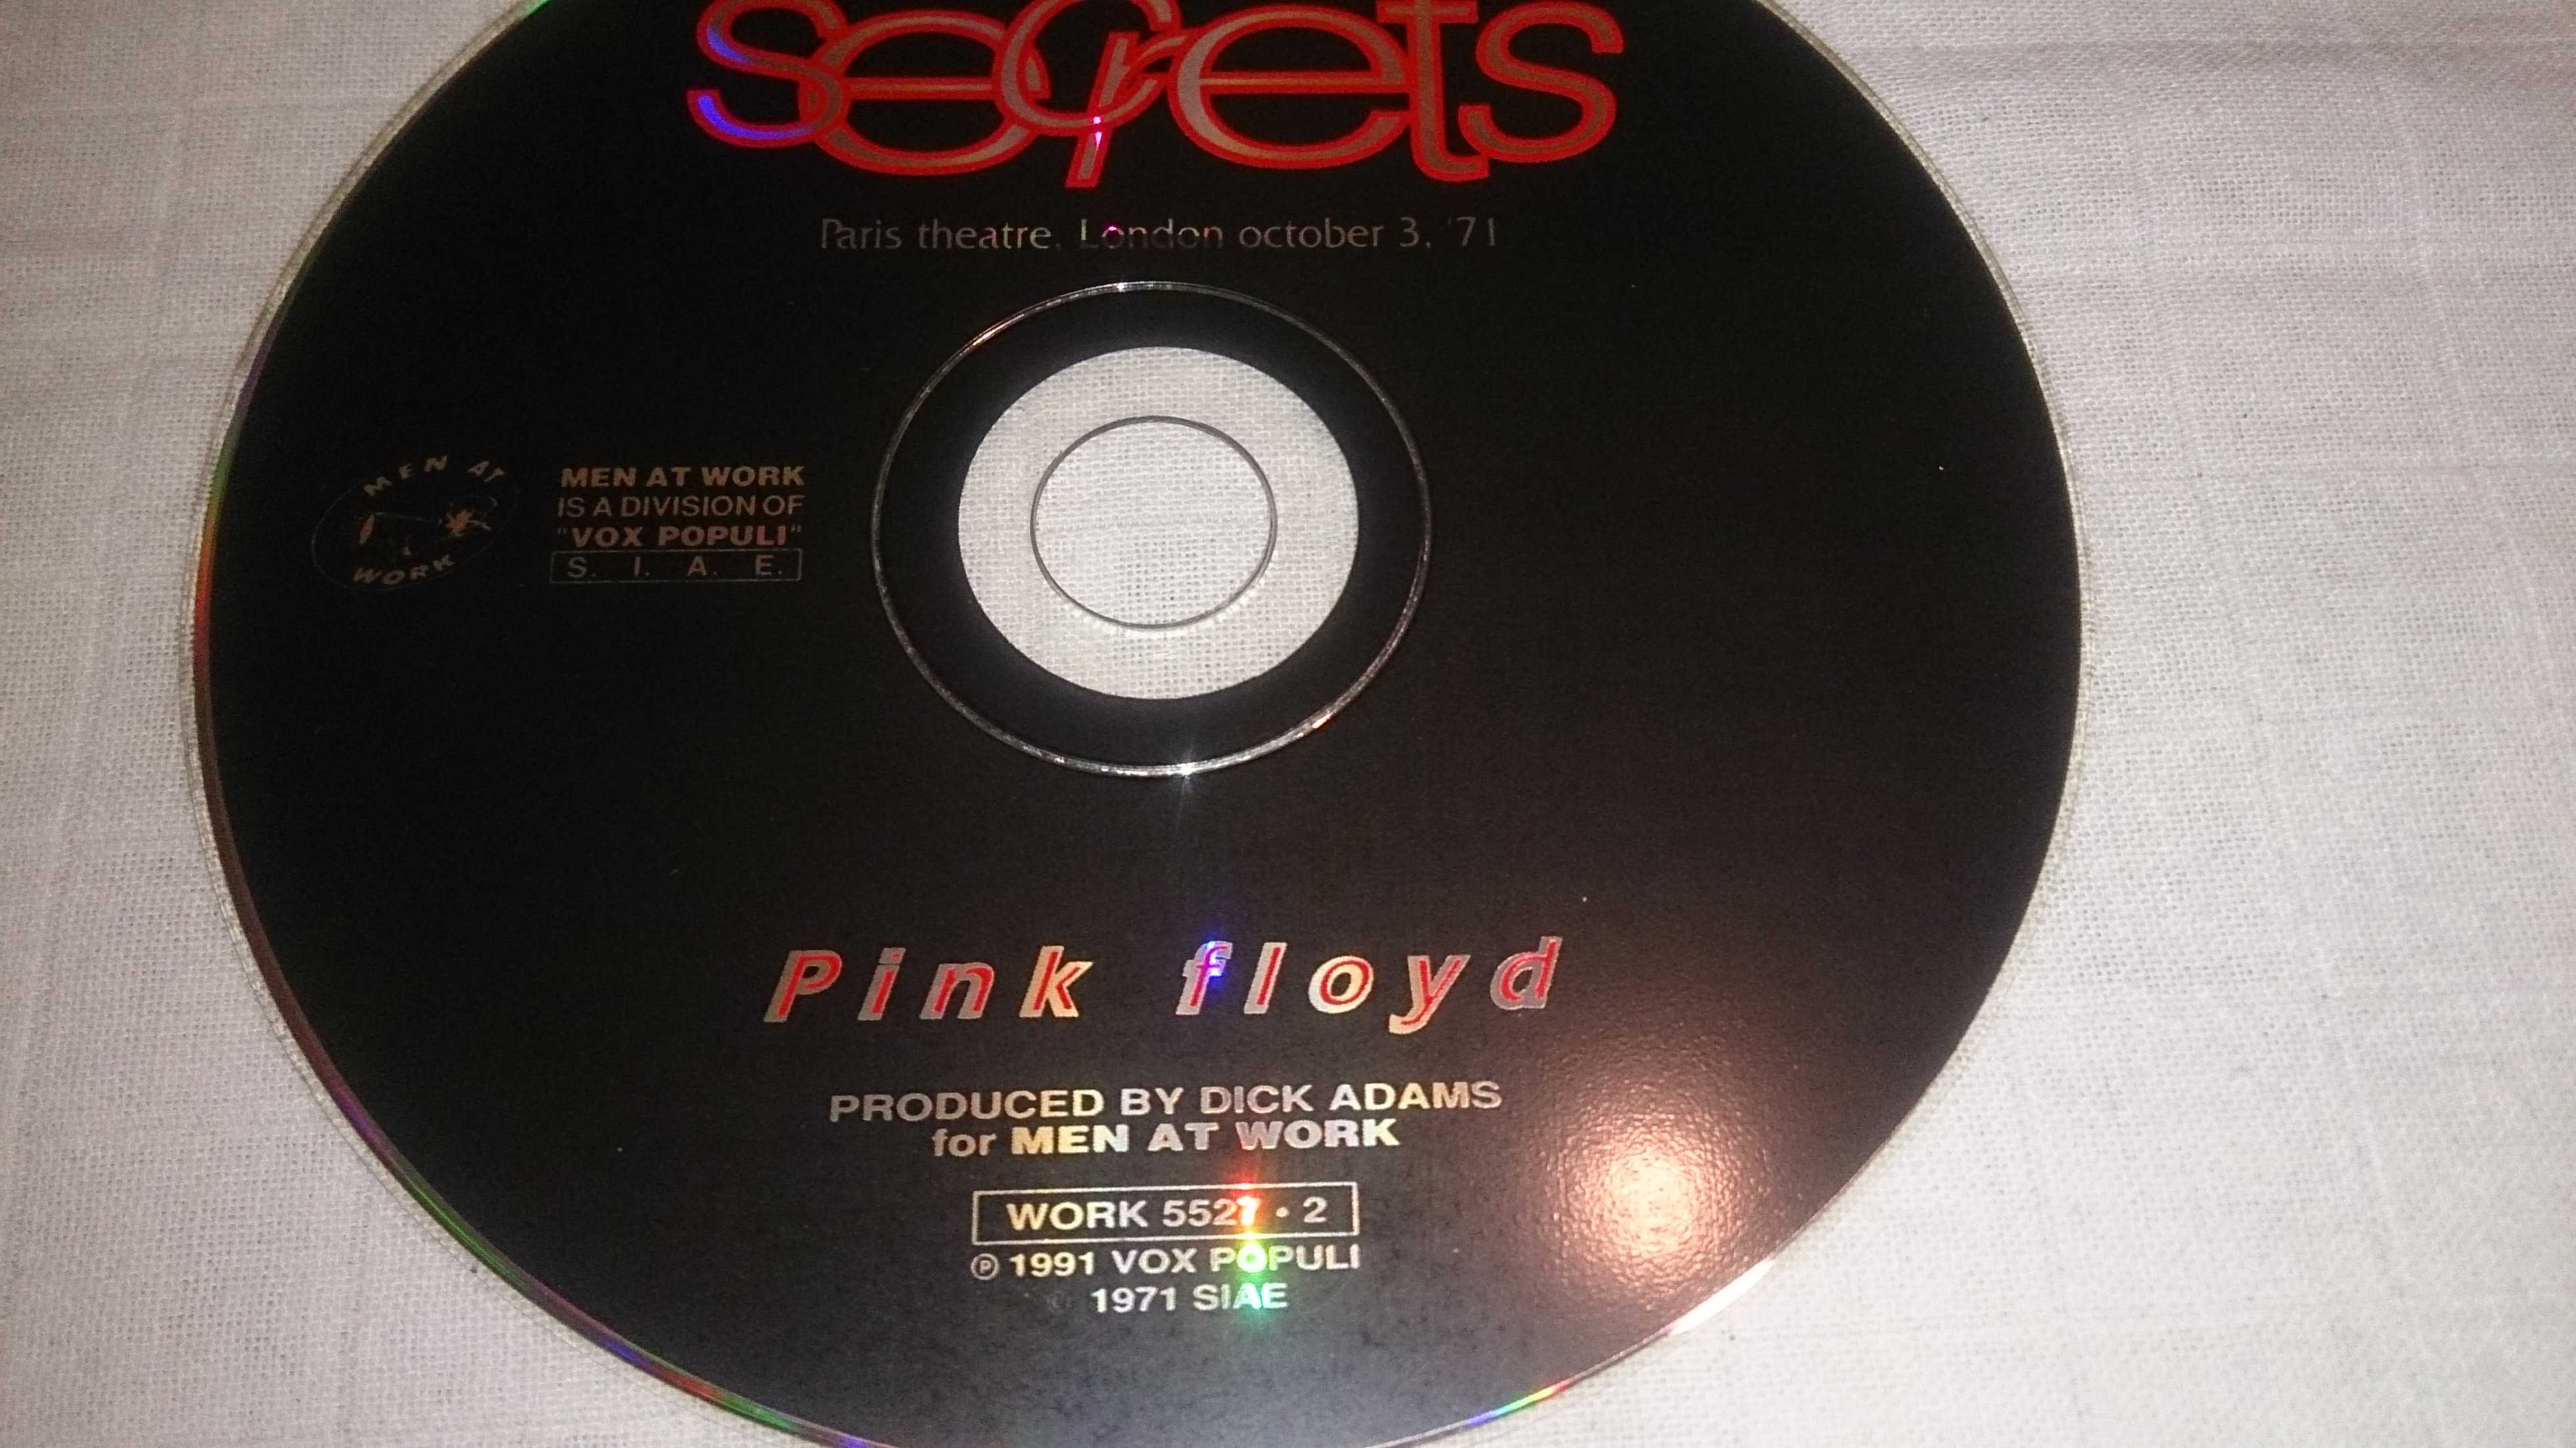 pink floyd (secrets) "paris theatre london october 3, 71" - cd raro